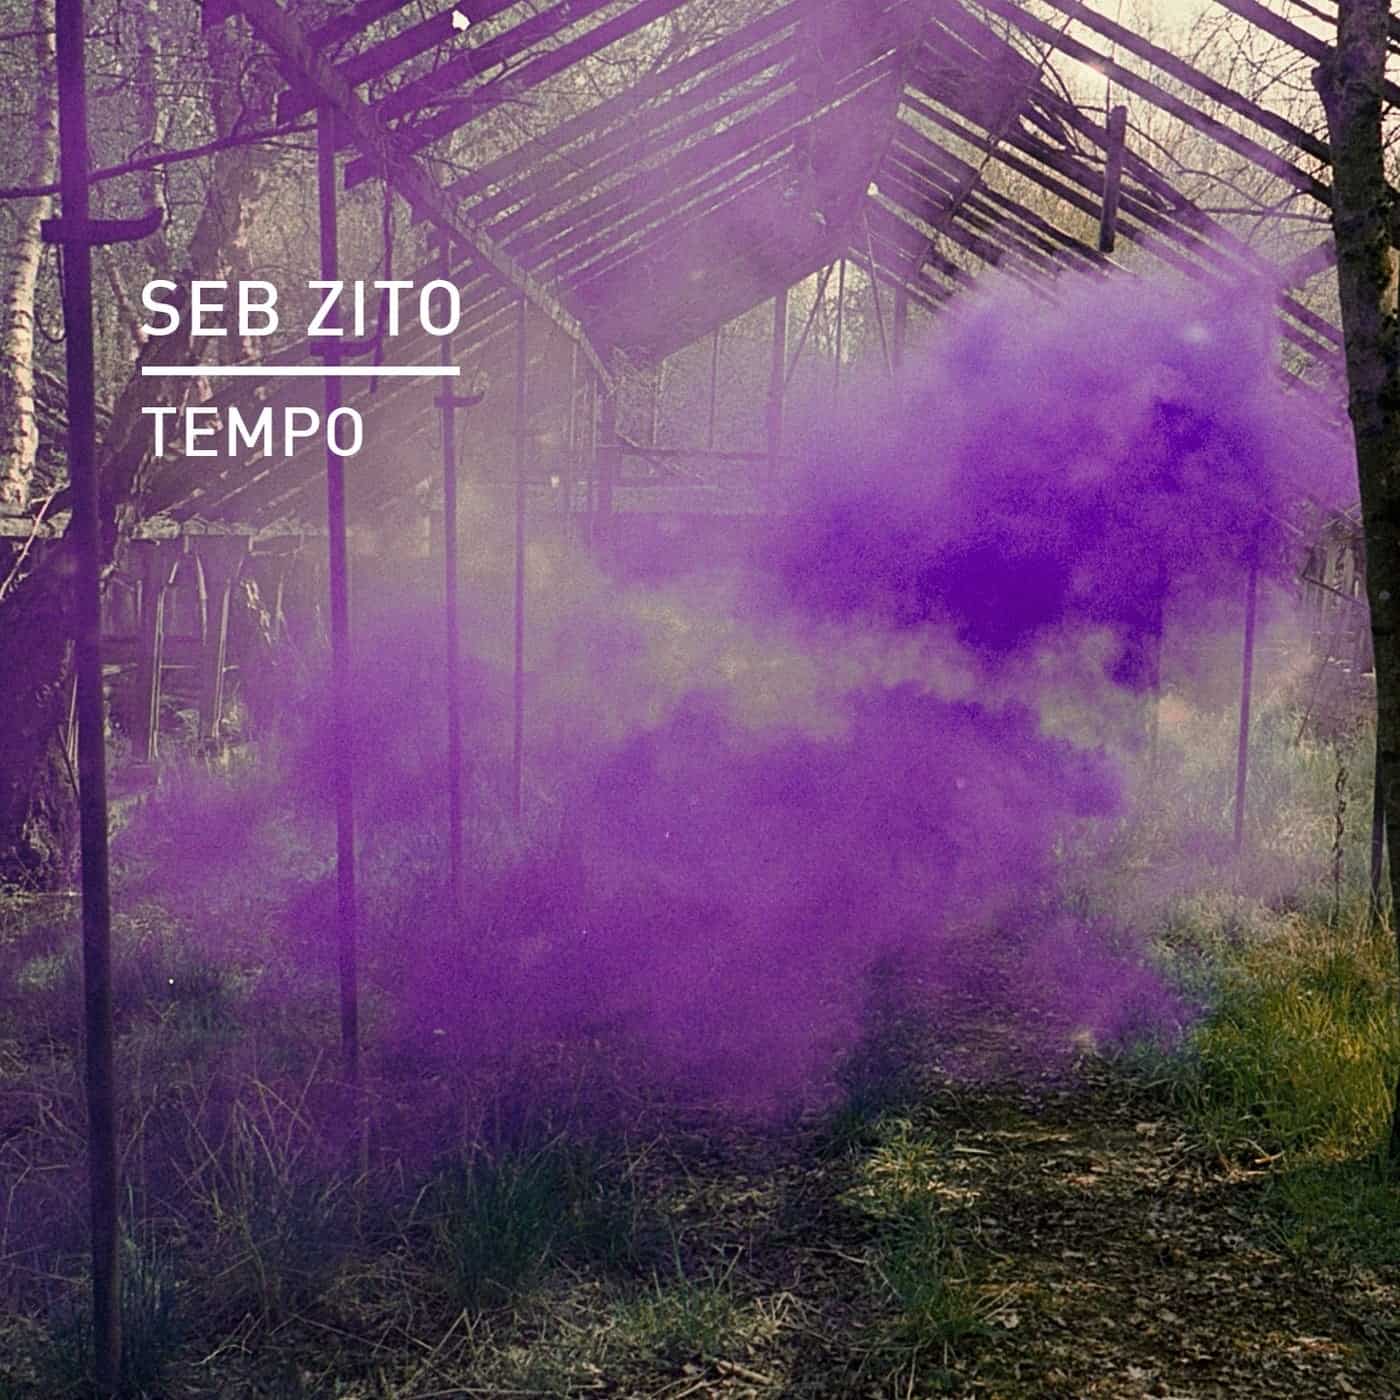 Download Tempo on Electrobuzz